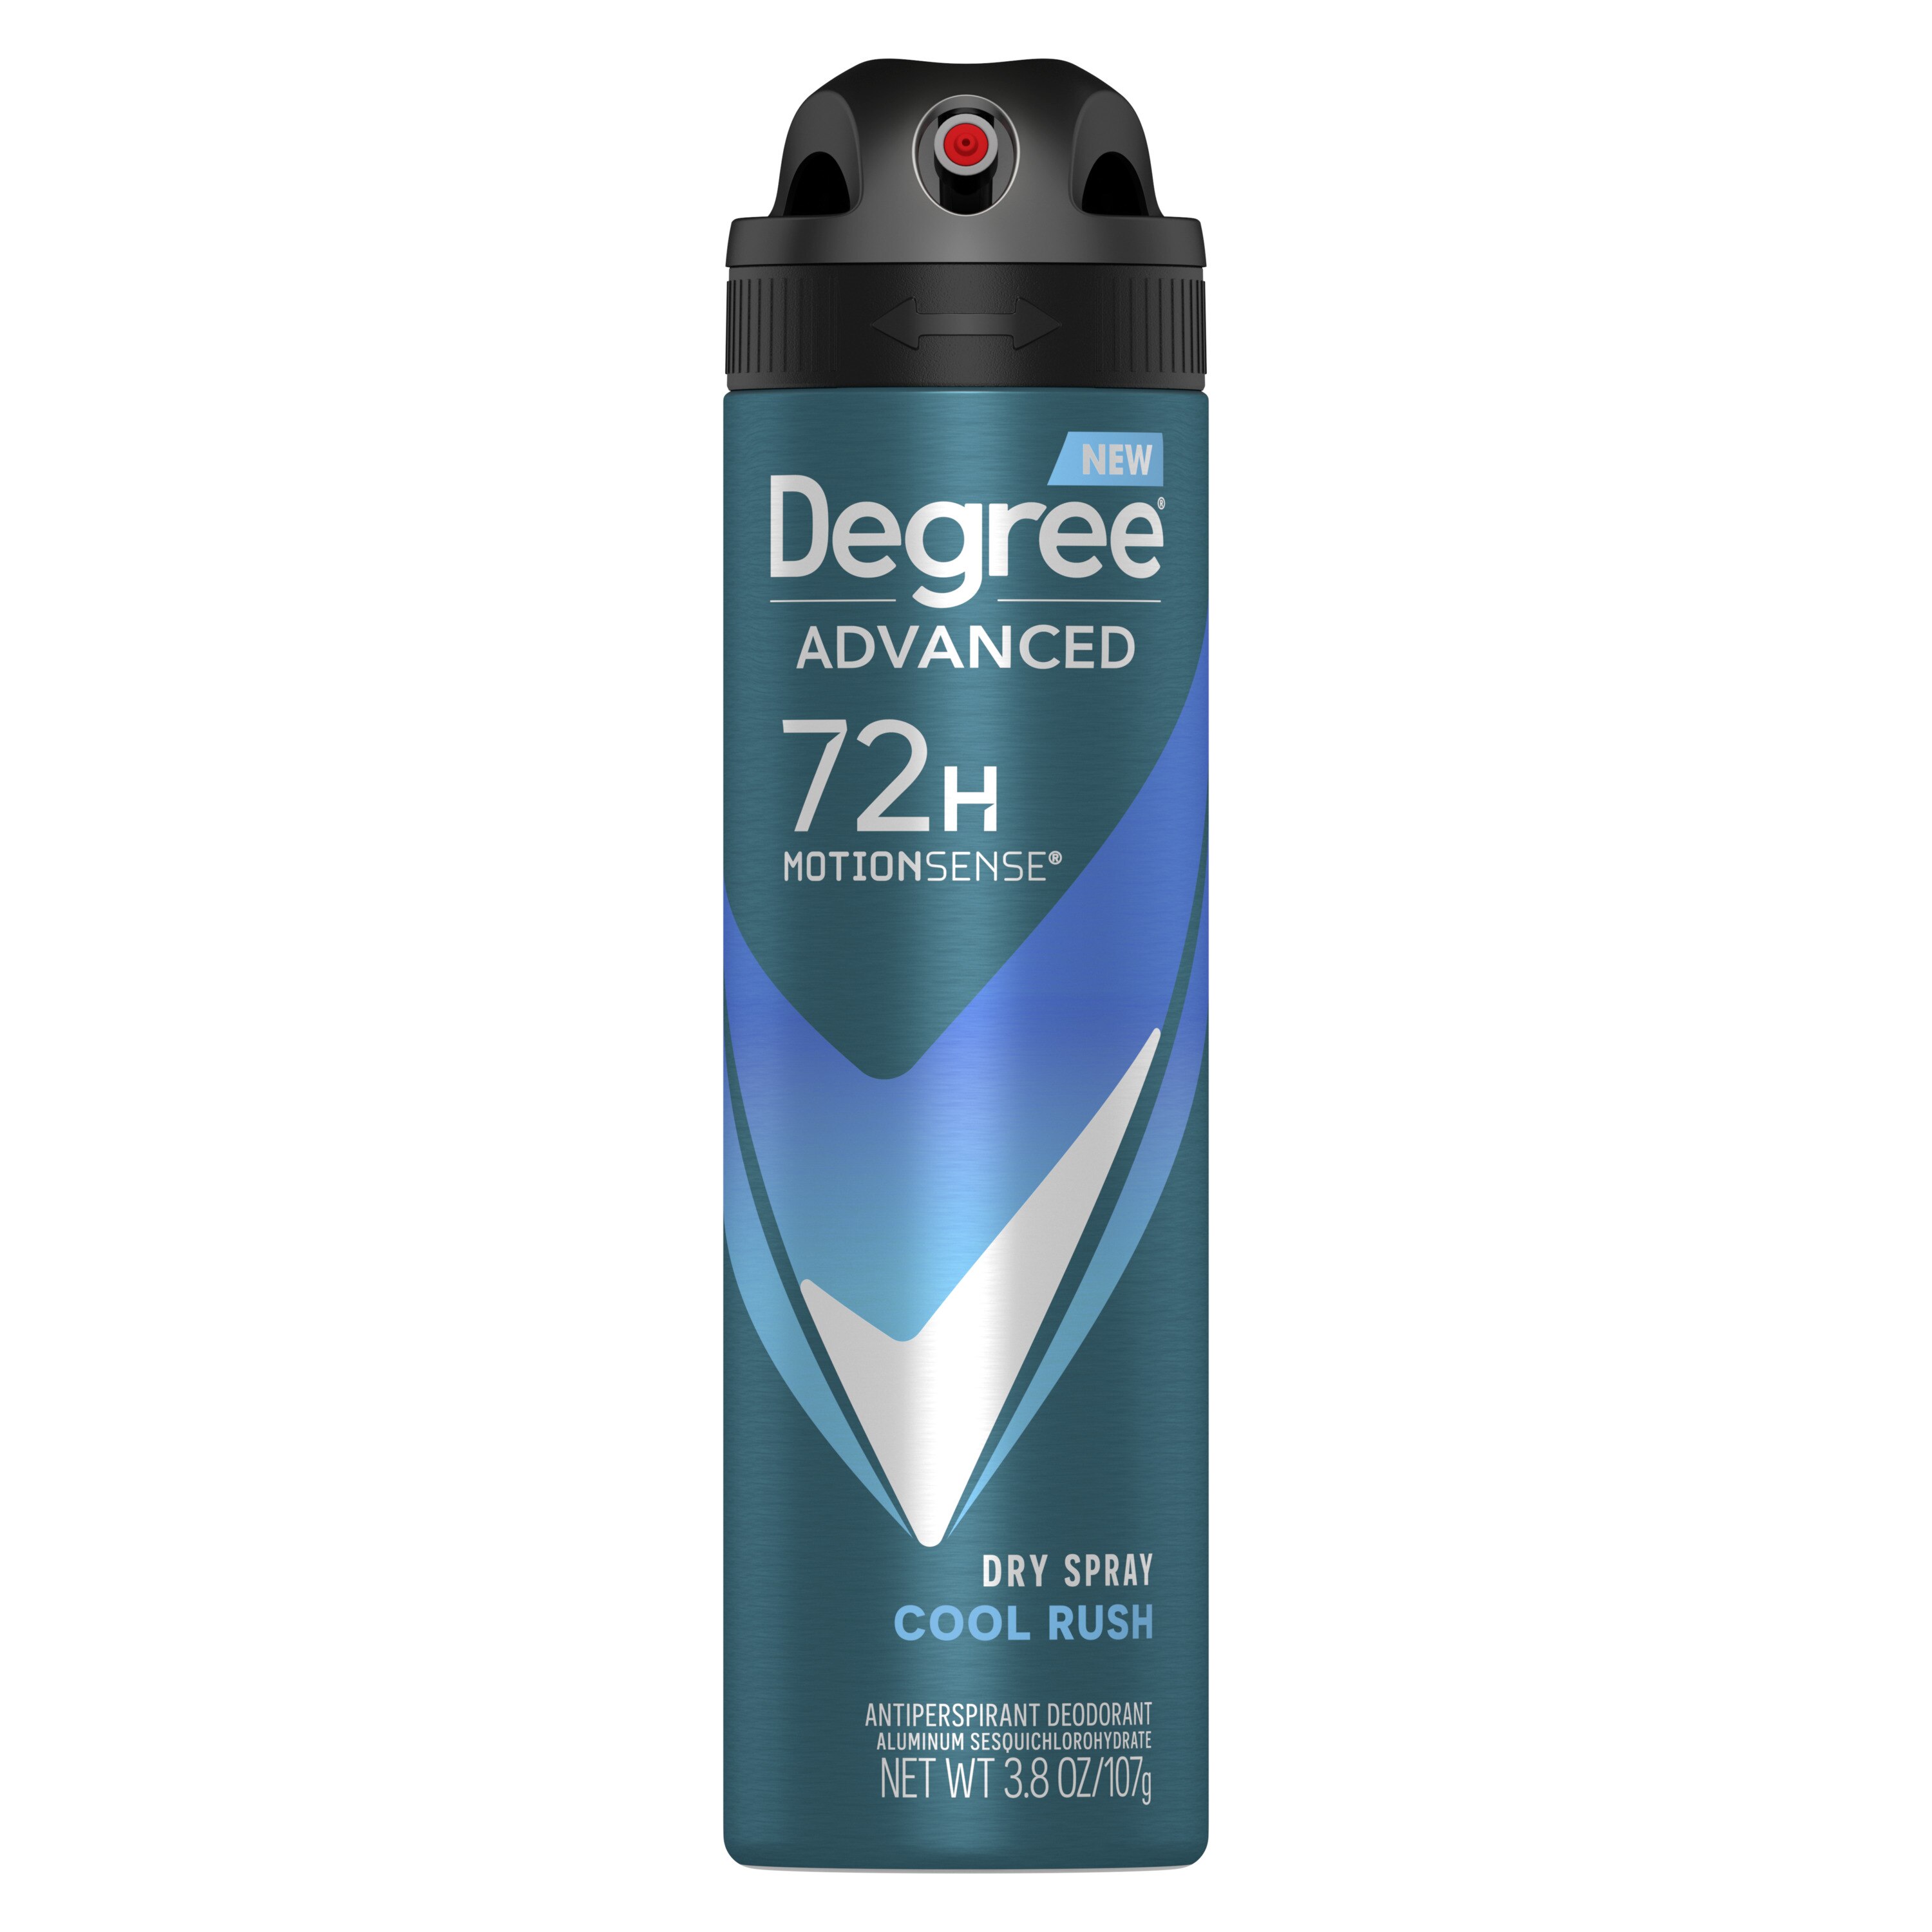 Degree Men Antiperspirant & Deodorant Dry Spray 72-Hour Advanced Motionsense, Cool Rush, 3.8 OZ